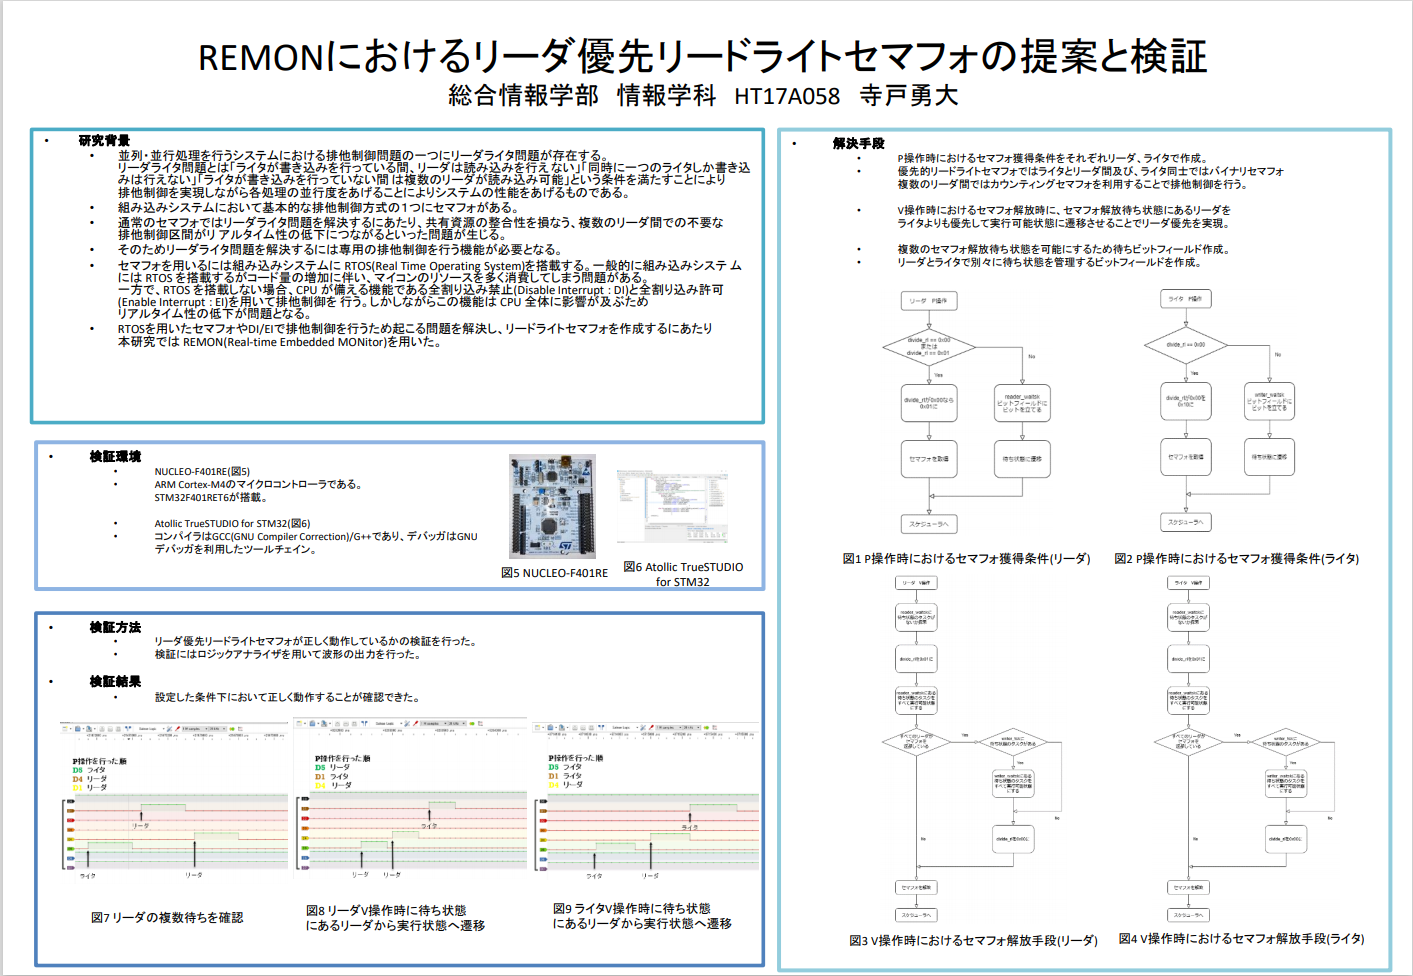 REMONにおけるリーダ優先リードライトセマフォの提案と検証 | 情報学科 